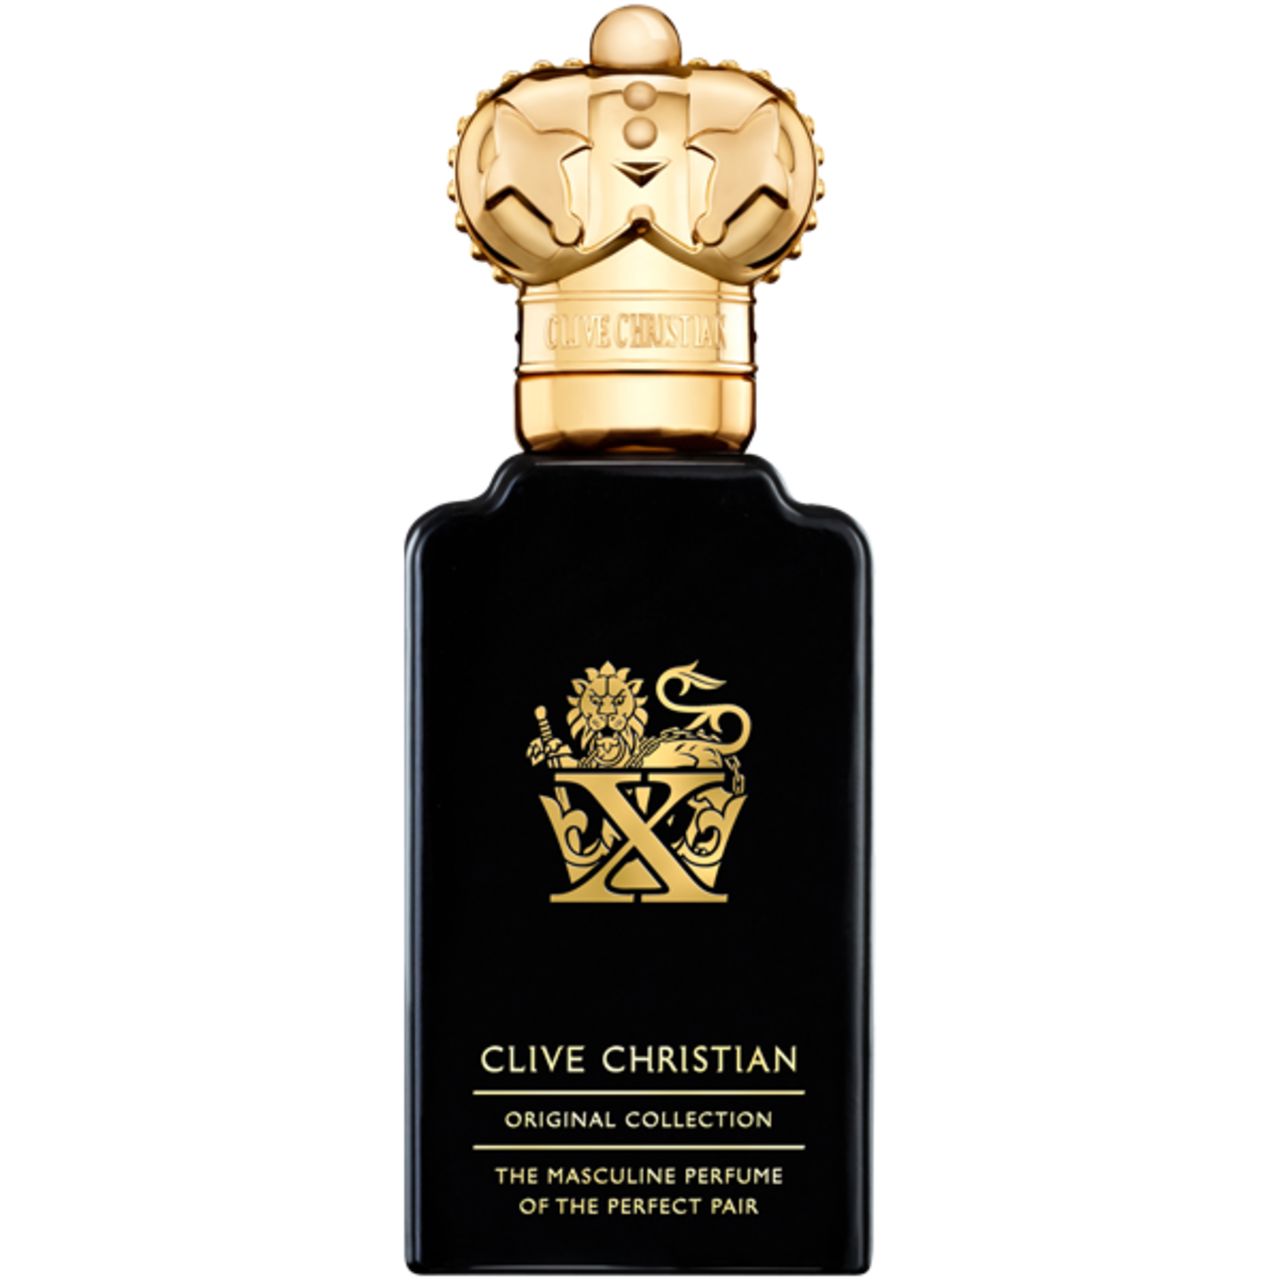 Clive Christian, X Masculine Perfume Spray